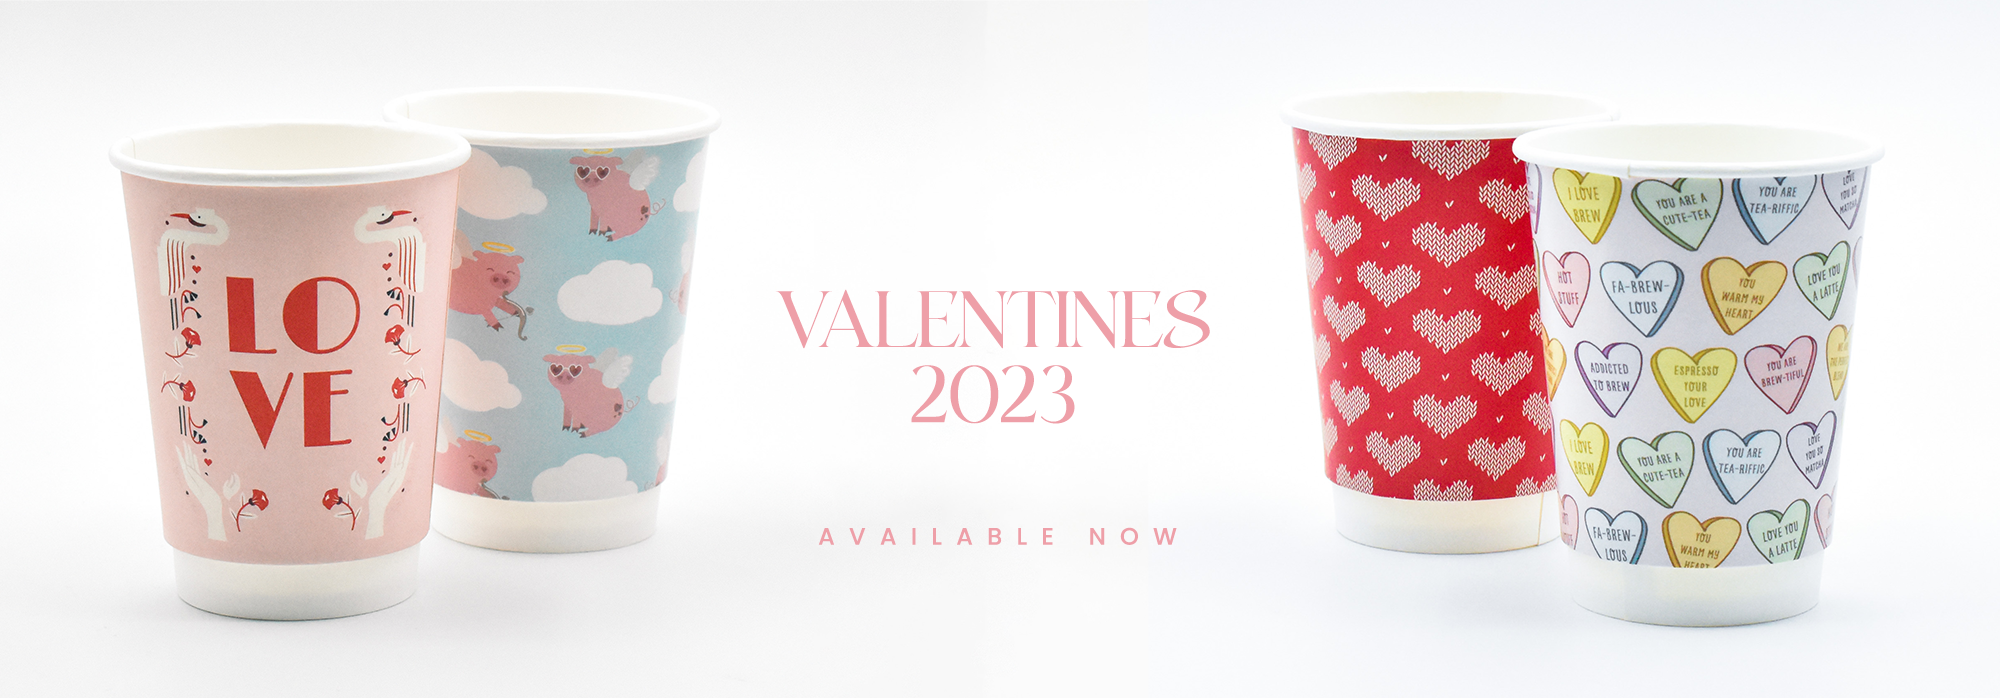 Valentines Cup Range 2023